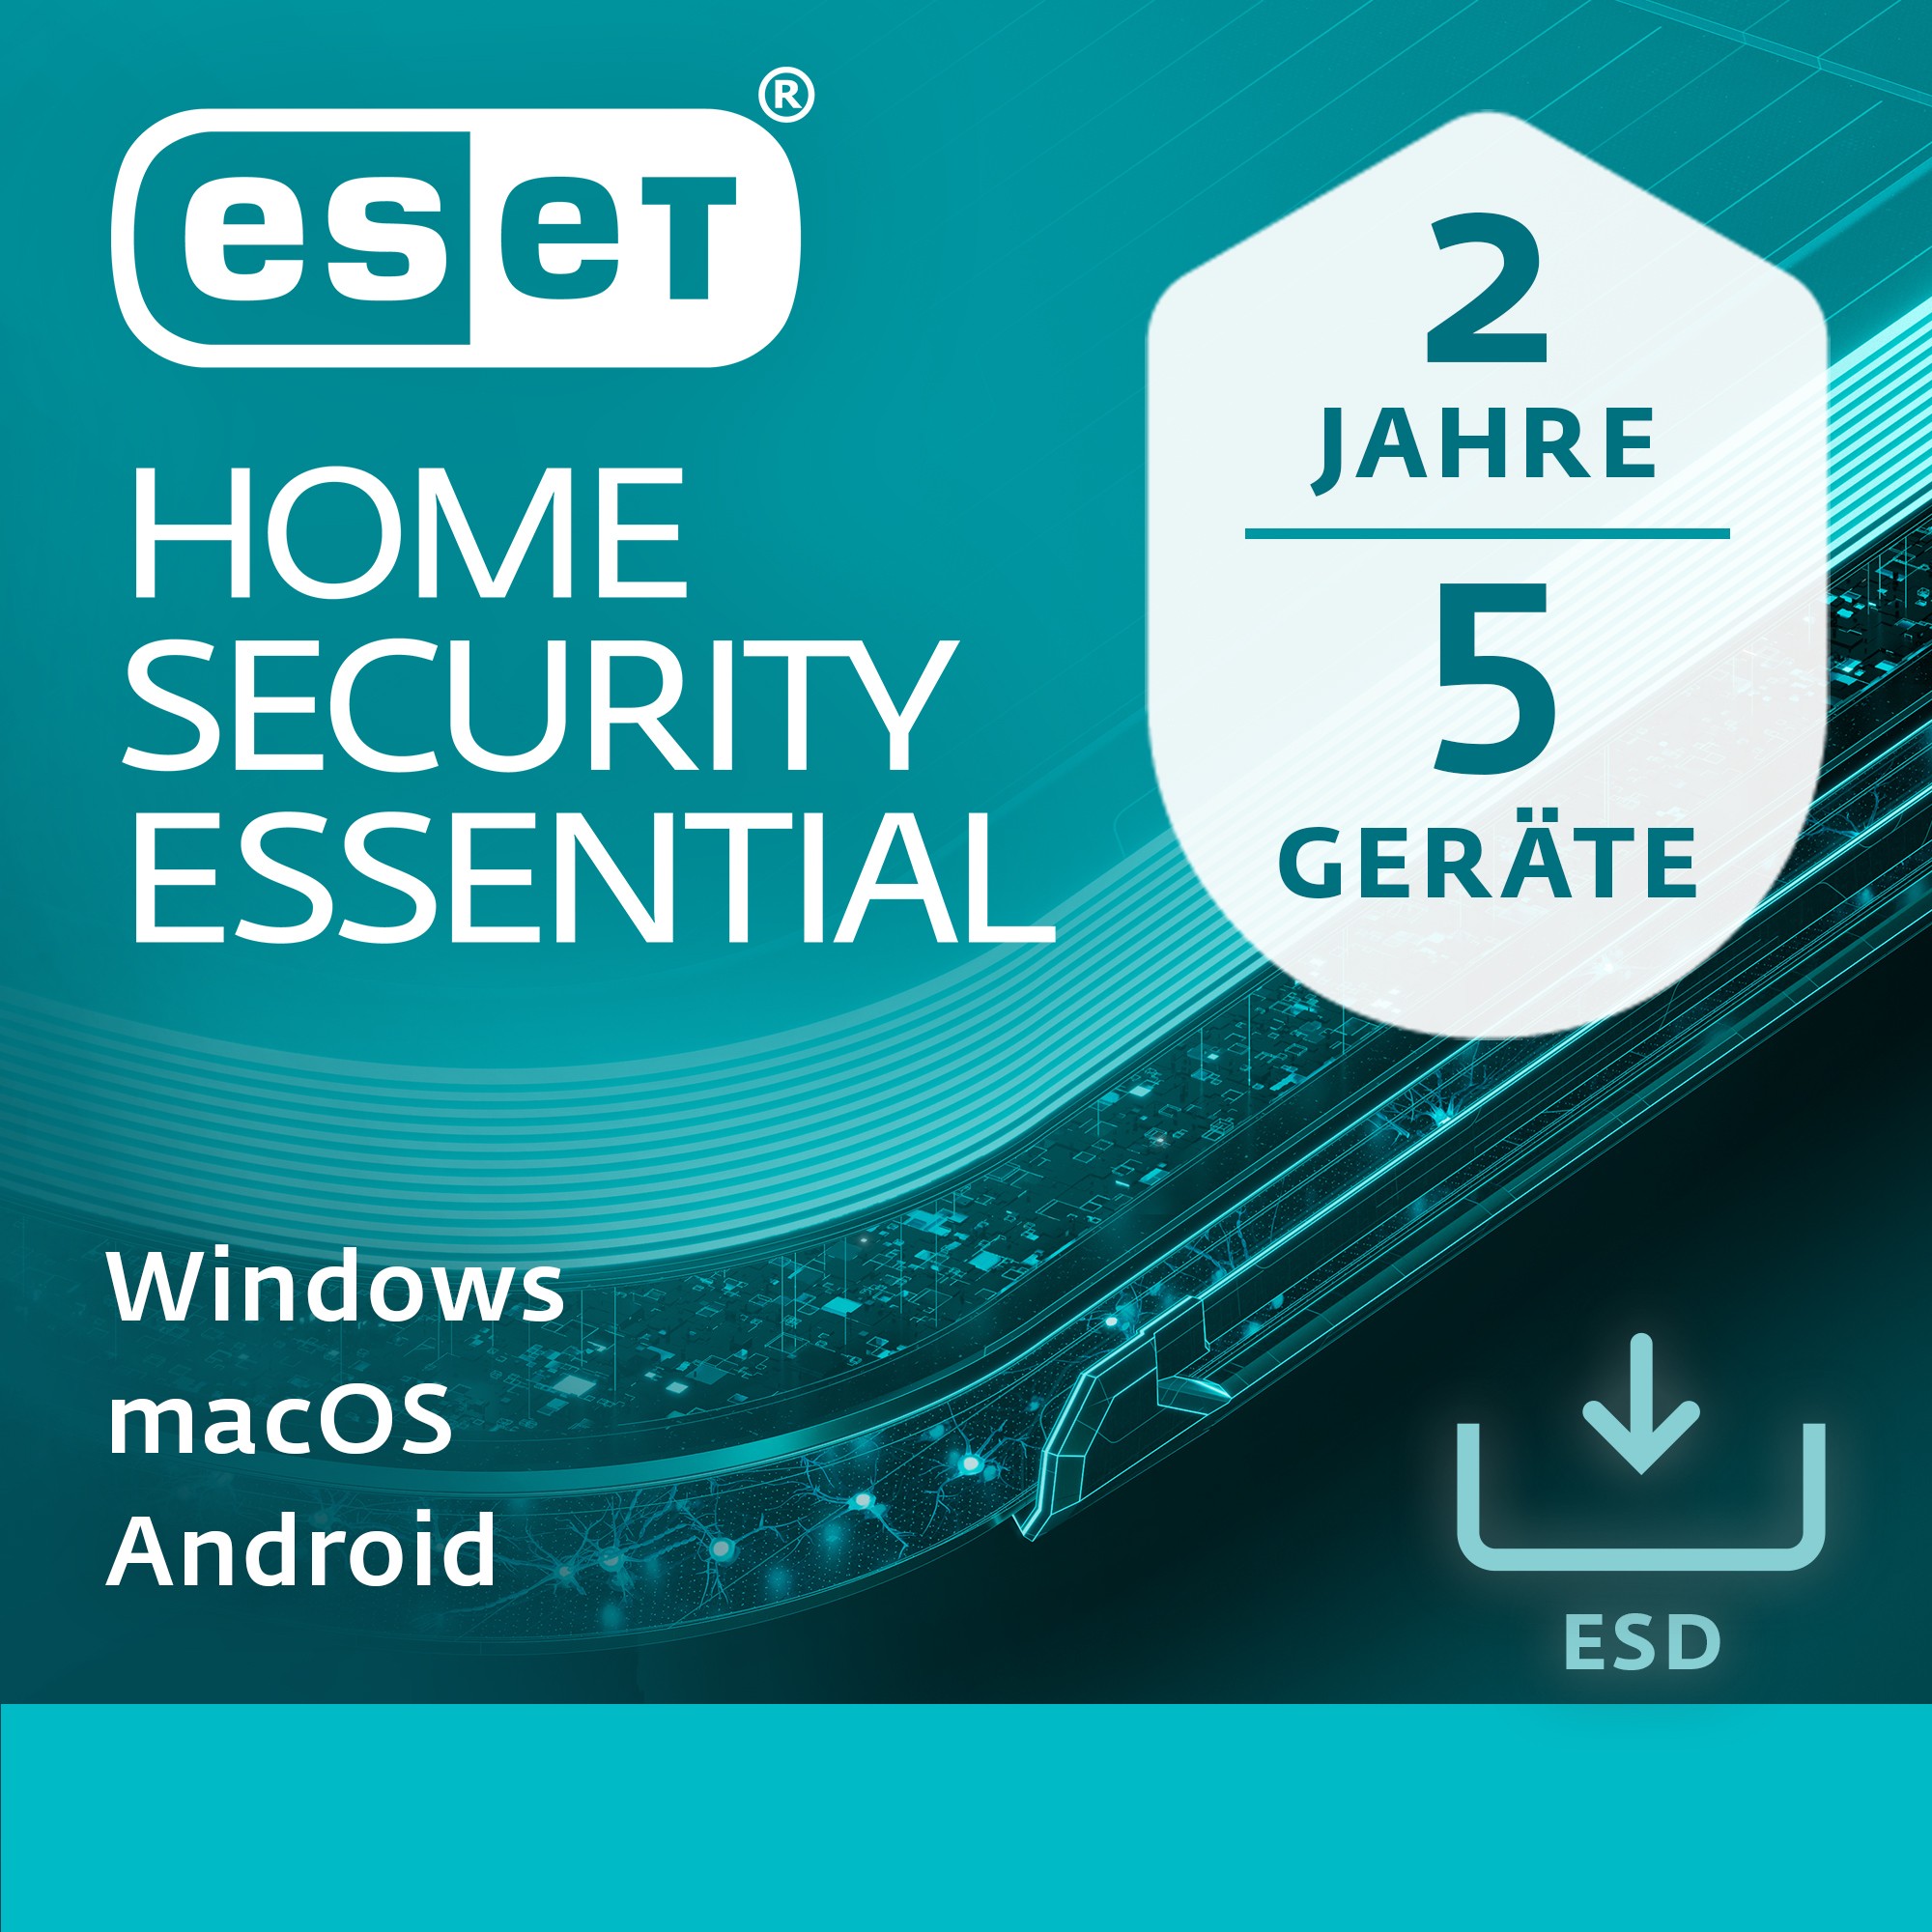 ESET EHSE-N2A5-VAKT-E, ESD-Lizenzen, ESET Home Security  (BILD1)